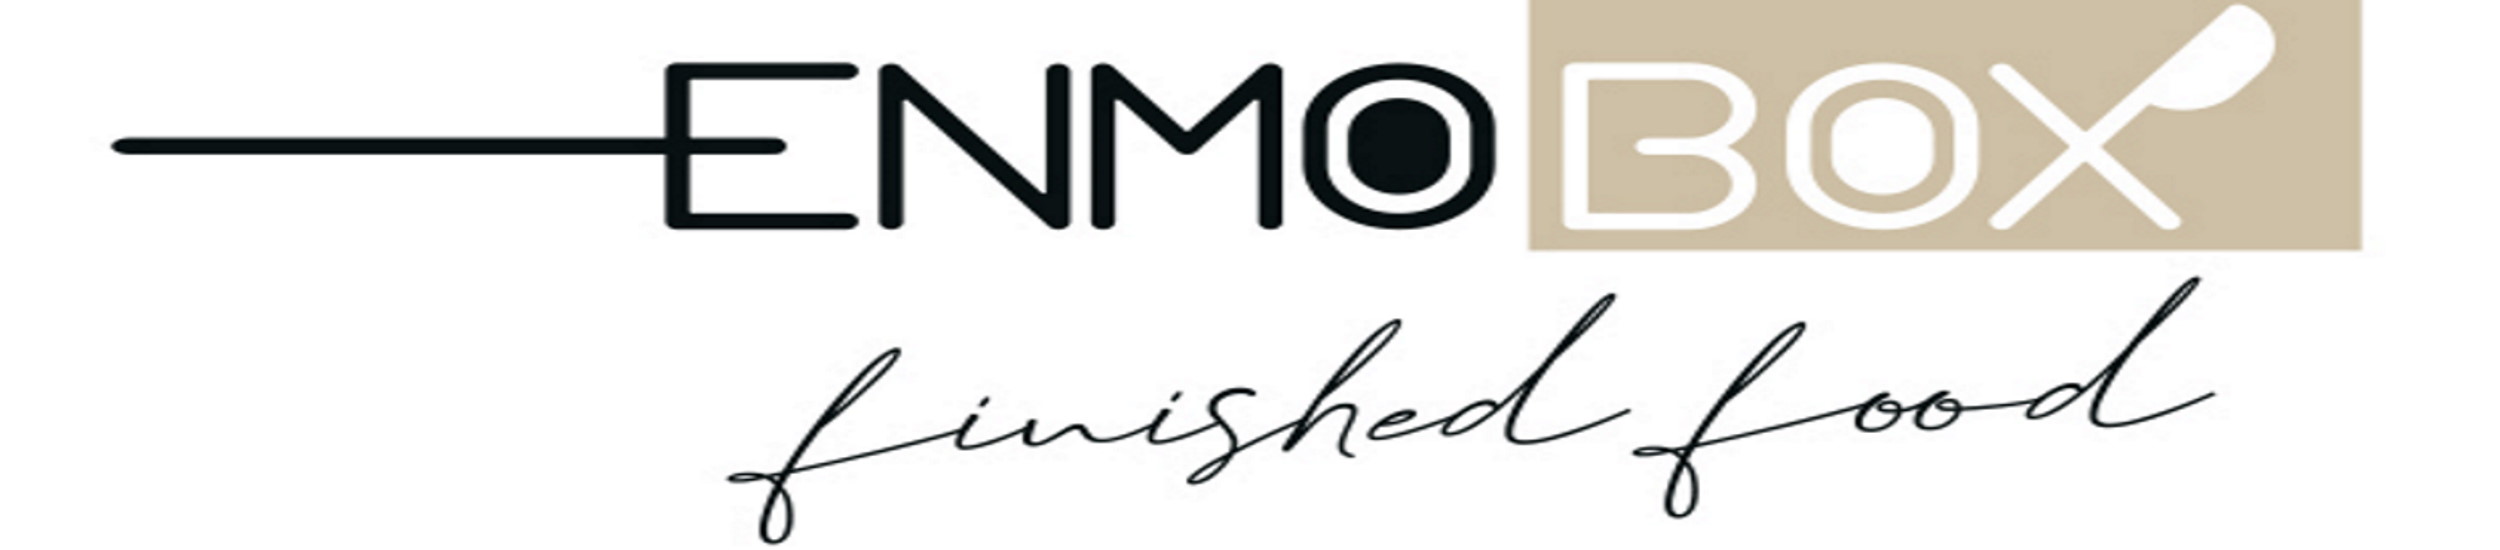 enmoBOX_Logo_Slider